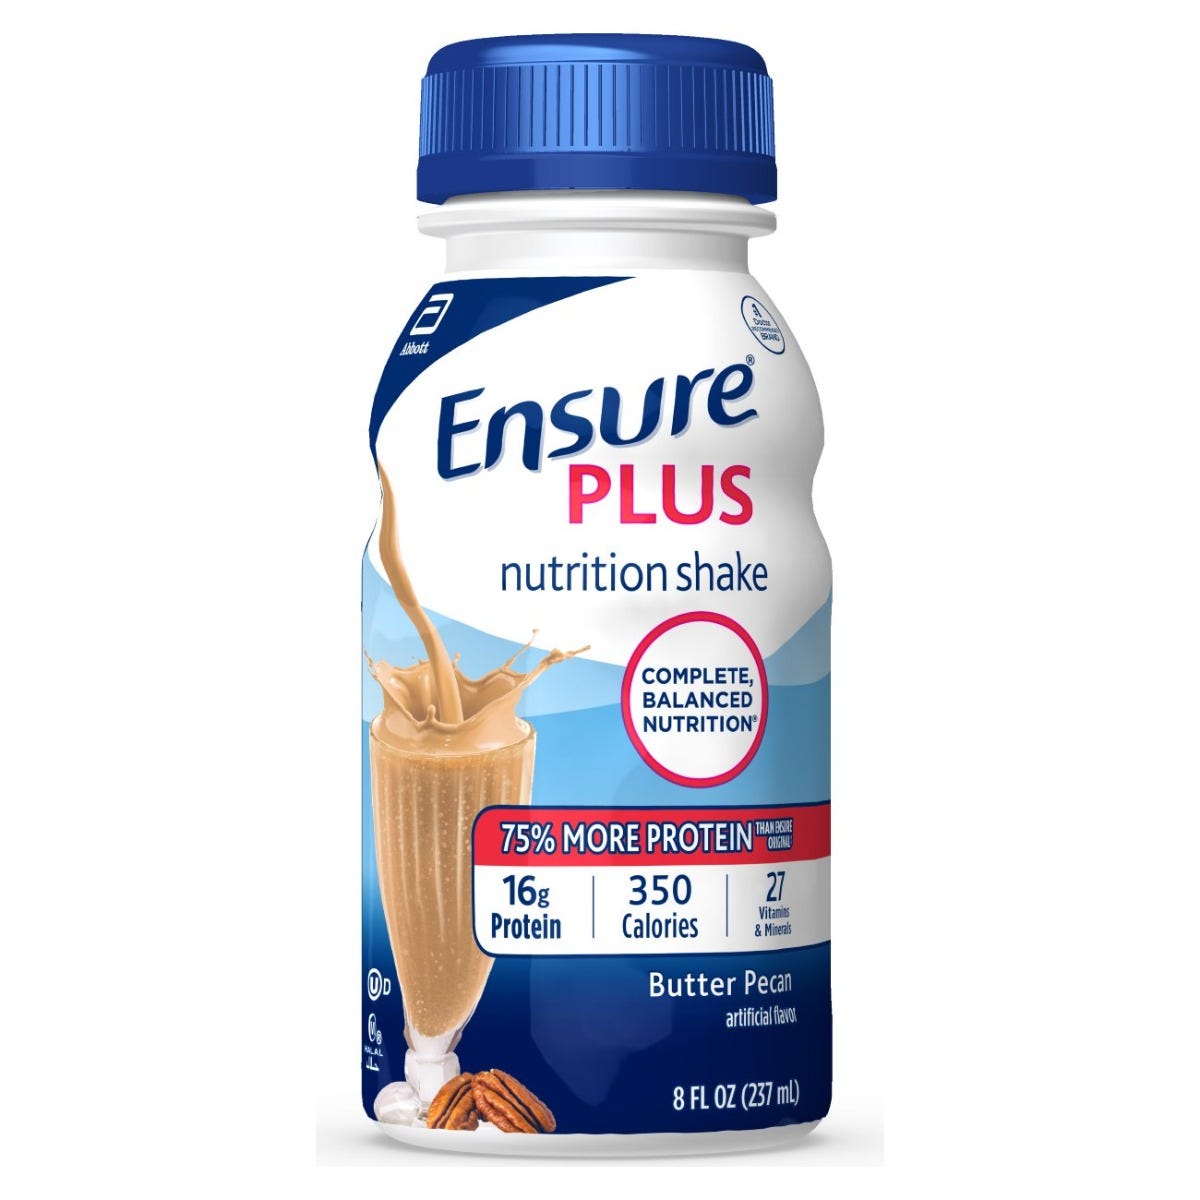 Ensure Plus Nutrition Shake / Butter Pecan / 8 fl oz